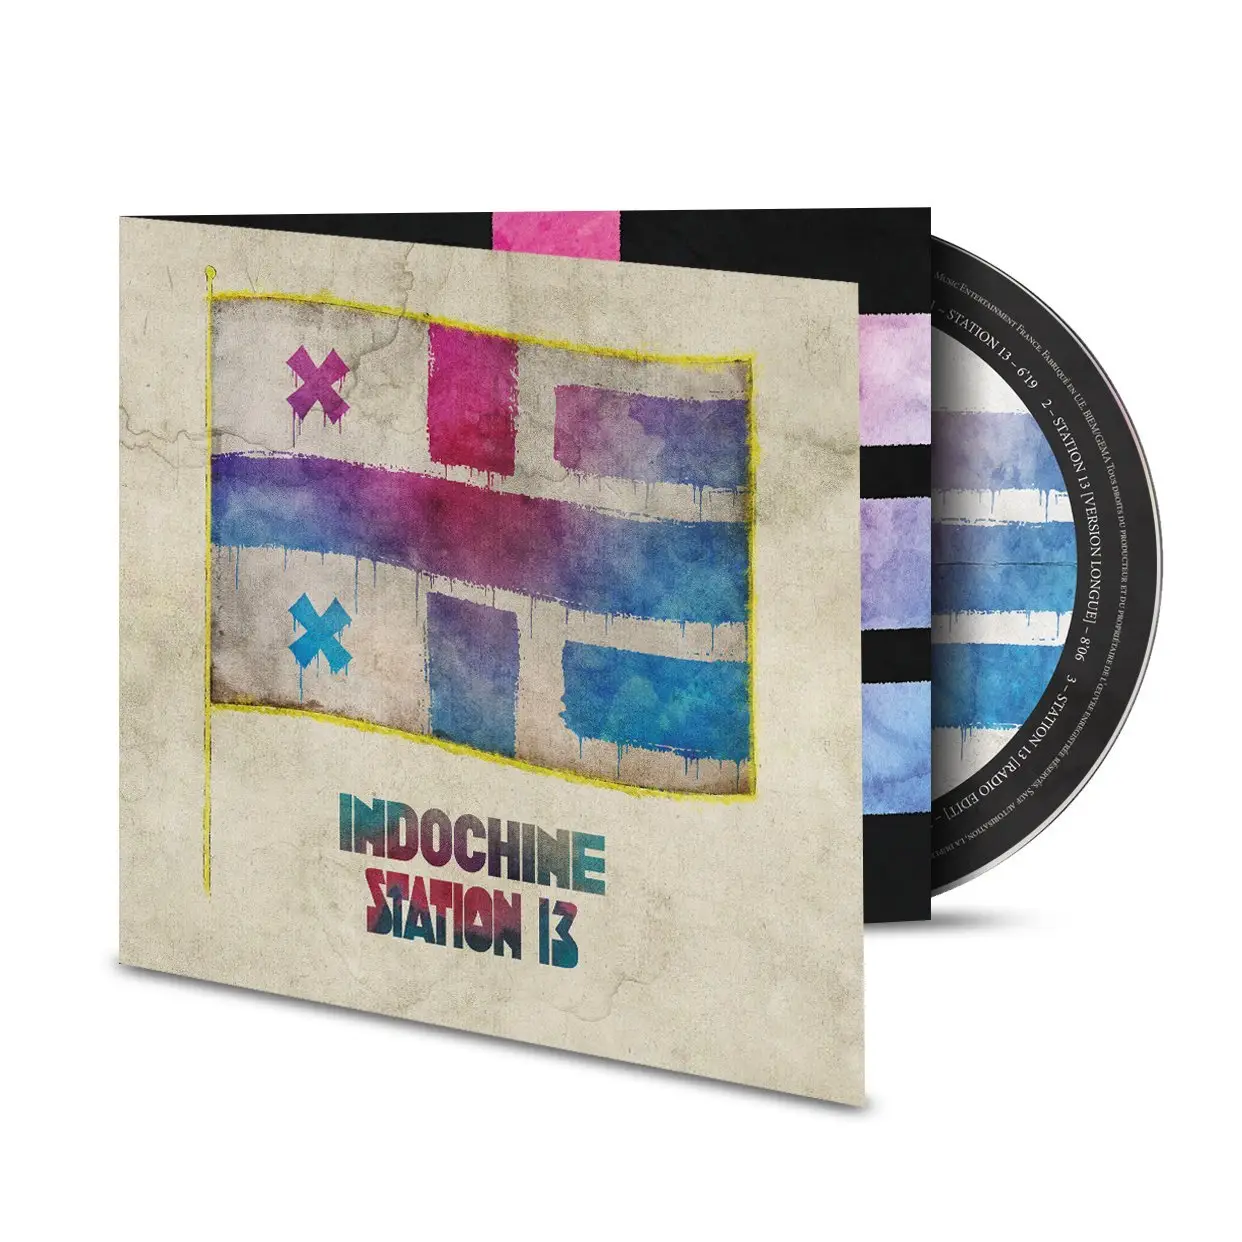 Station 13 - Indochine [maxi single 6 titres], CD pas cher Amazon